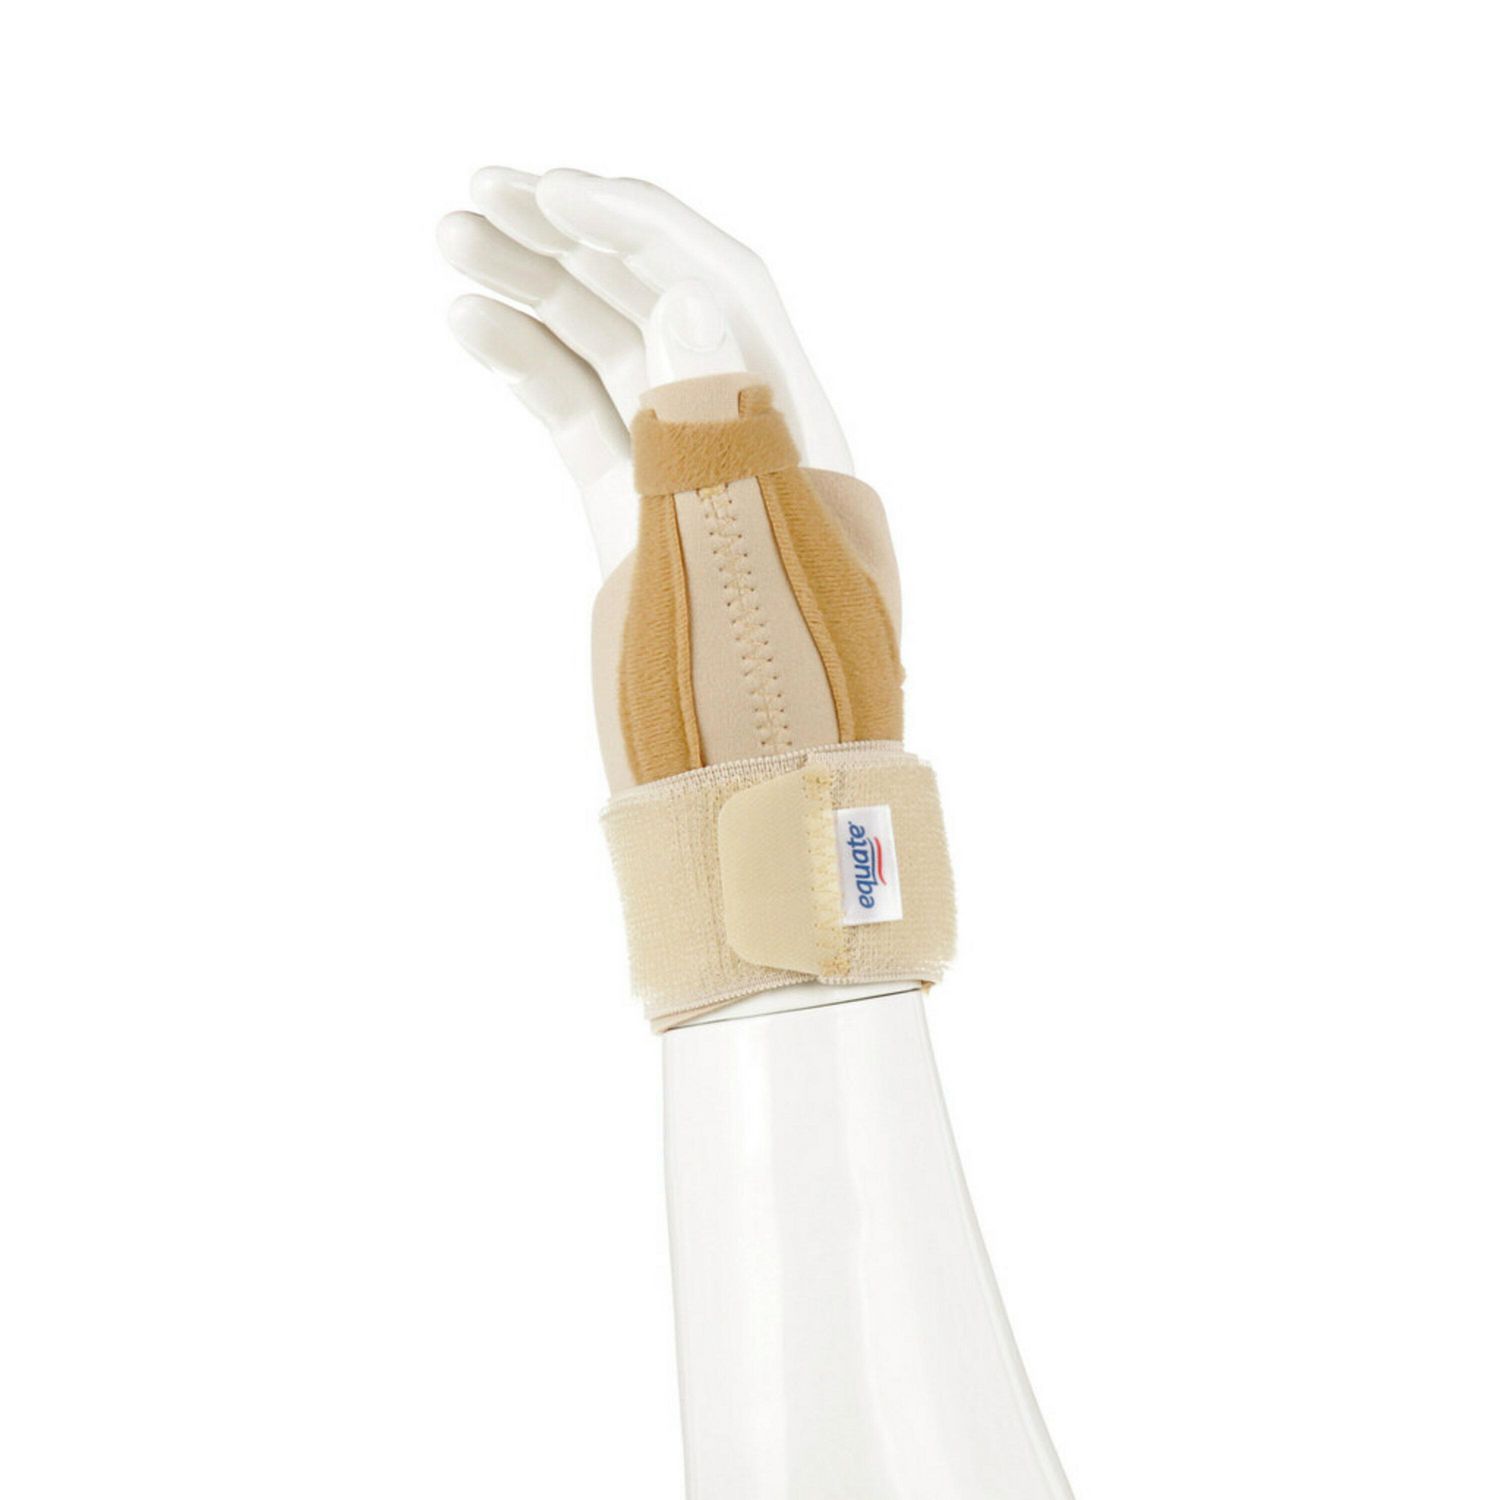 Equate(Tm/Mc) Reversible Splint Wrist Brace 39703WMCA, 1 Brace Per